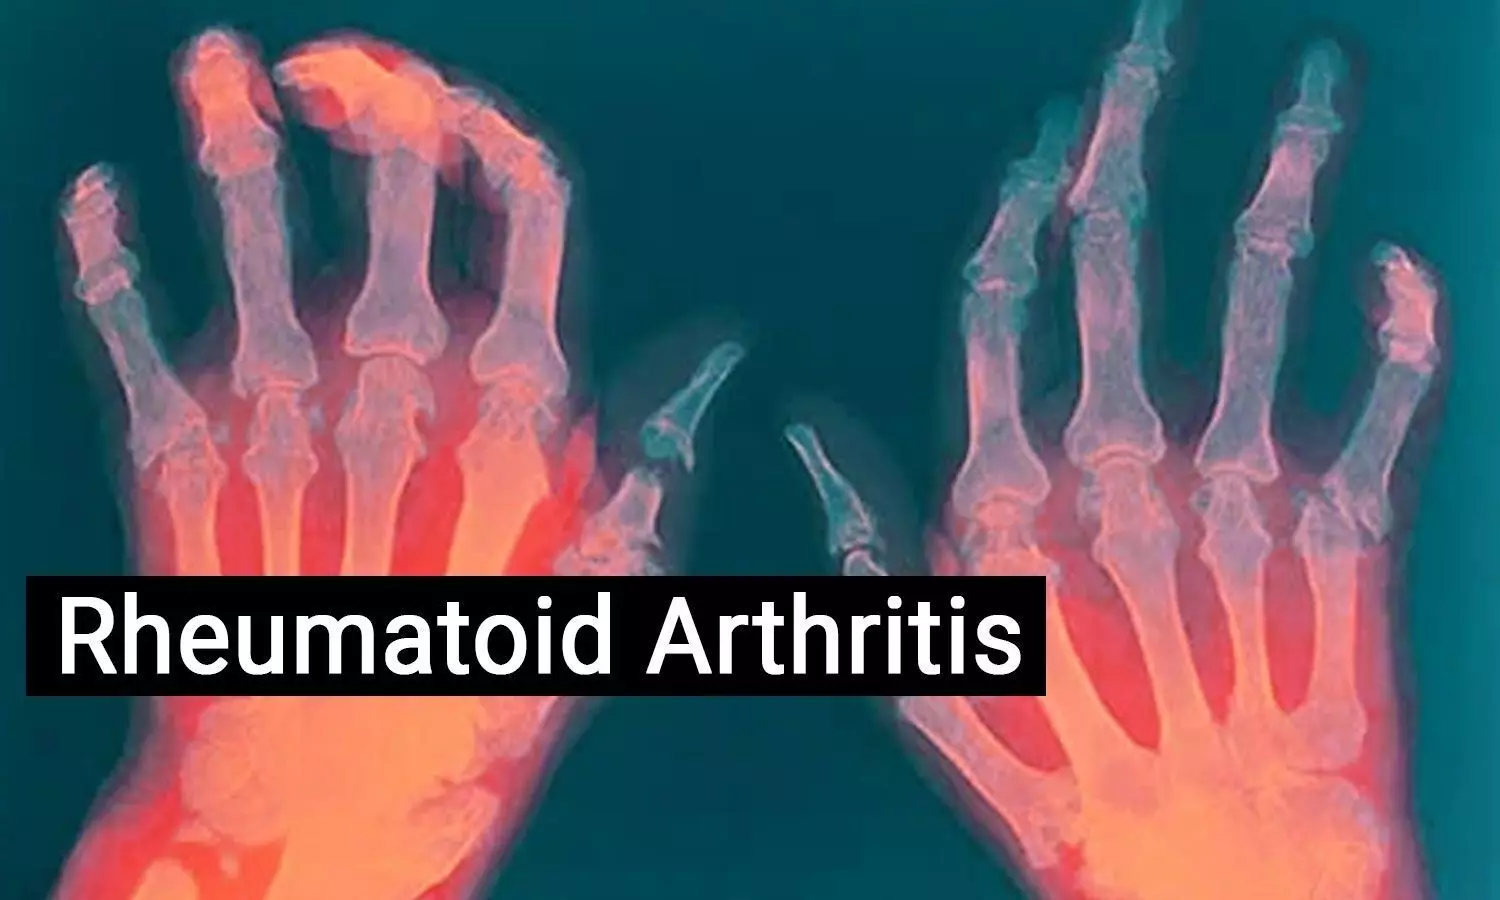 Periodontitis is a Risk Factor for Rheumatoid Arthritis: Study